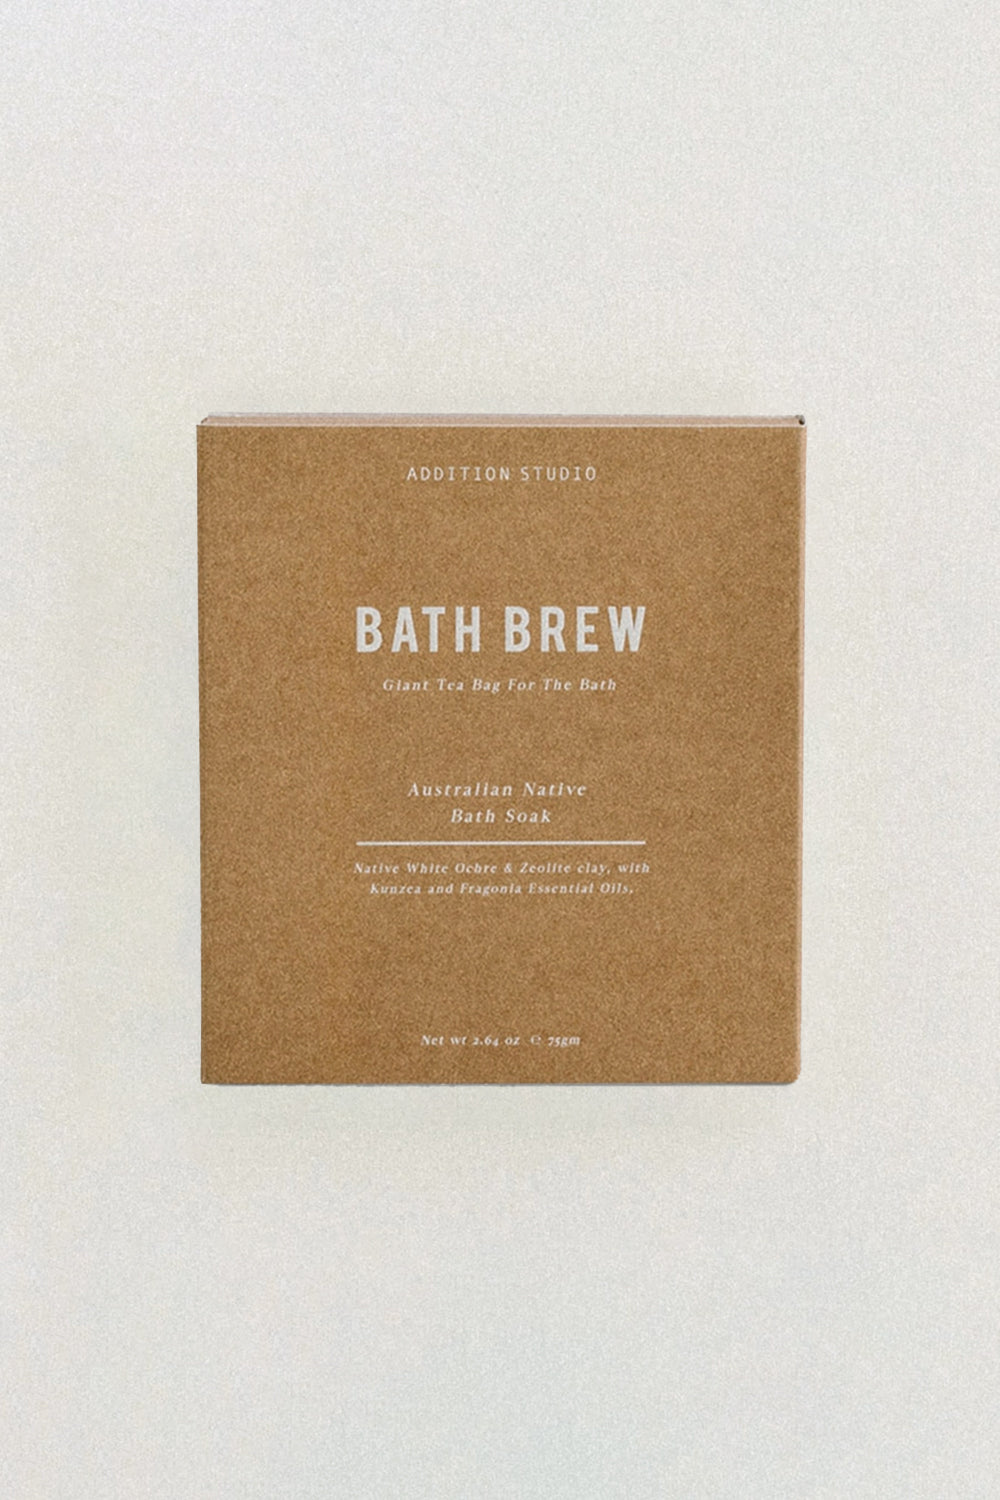 Bath Brew – Australian Native